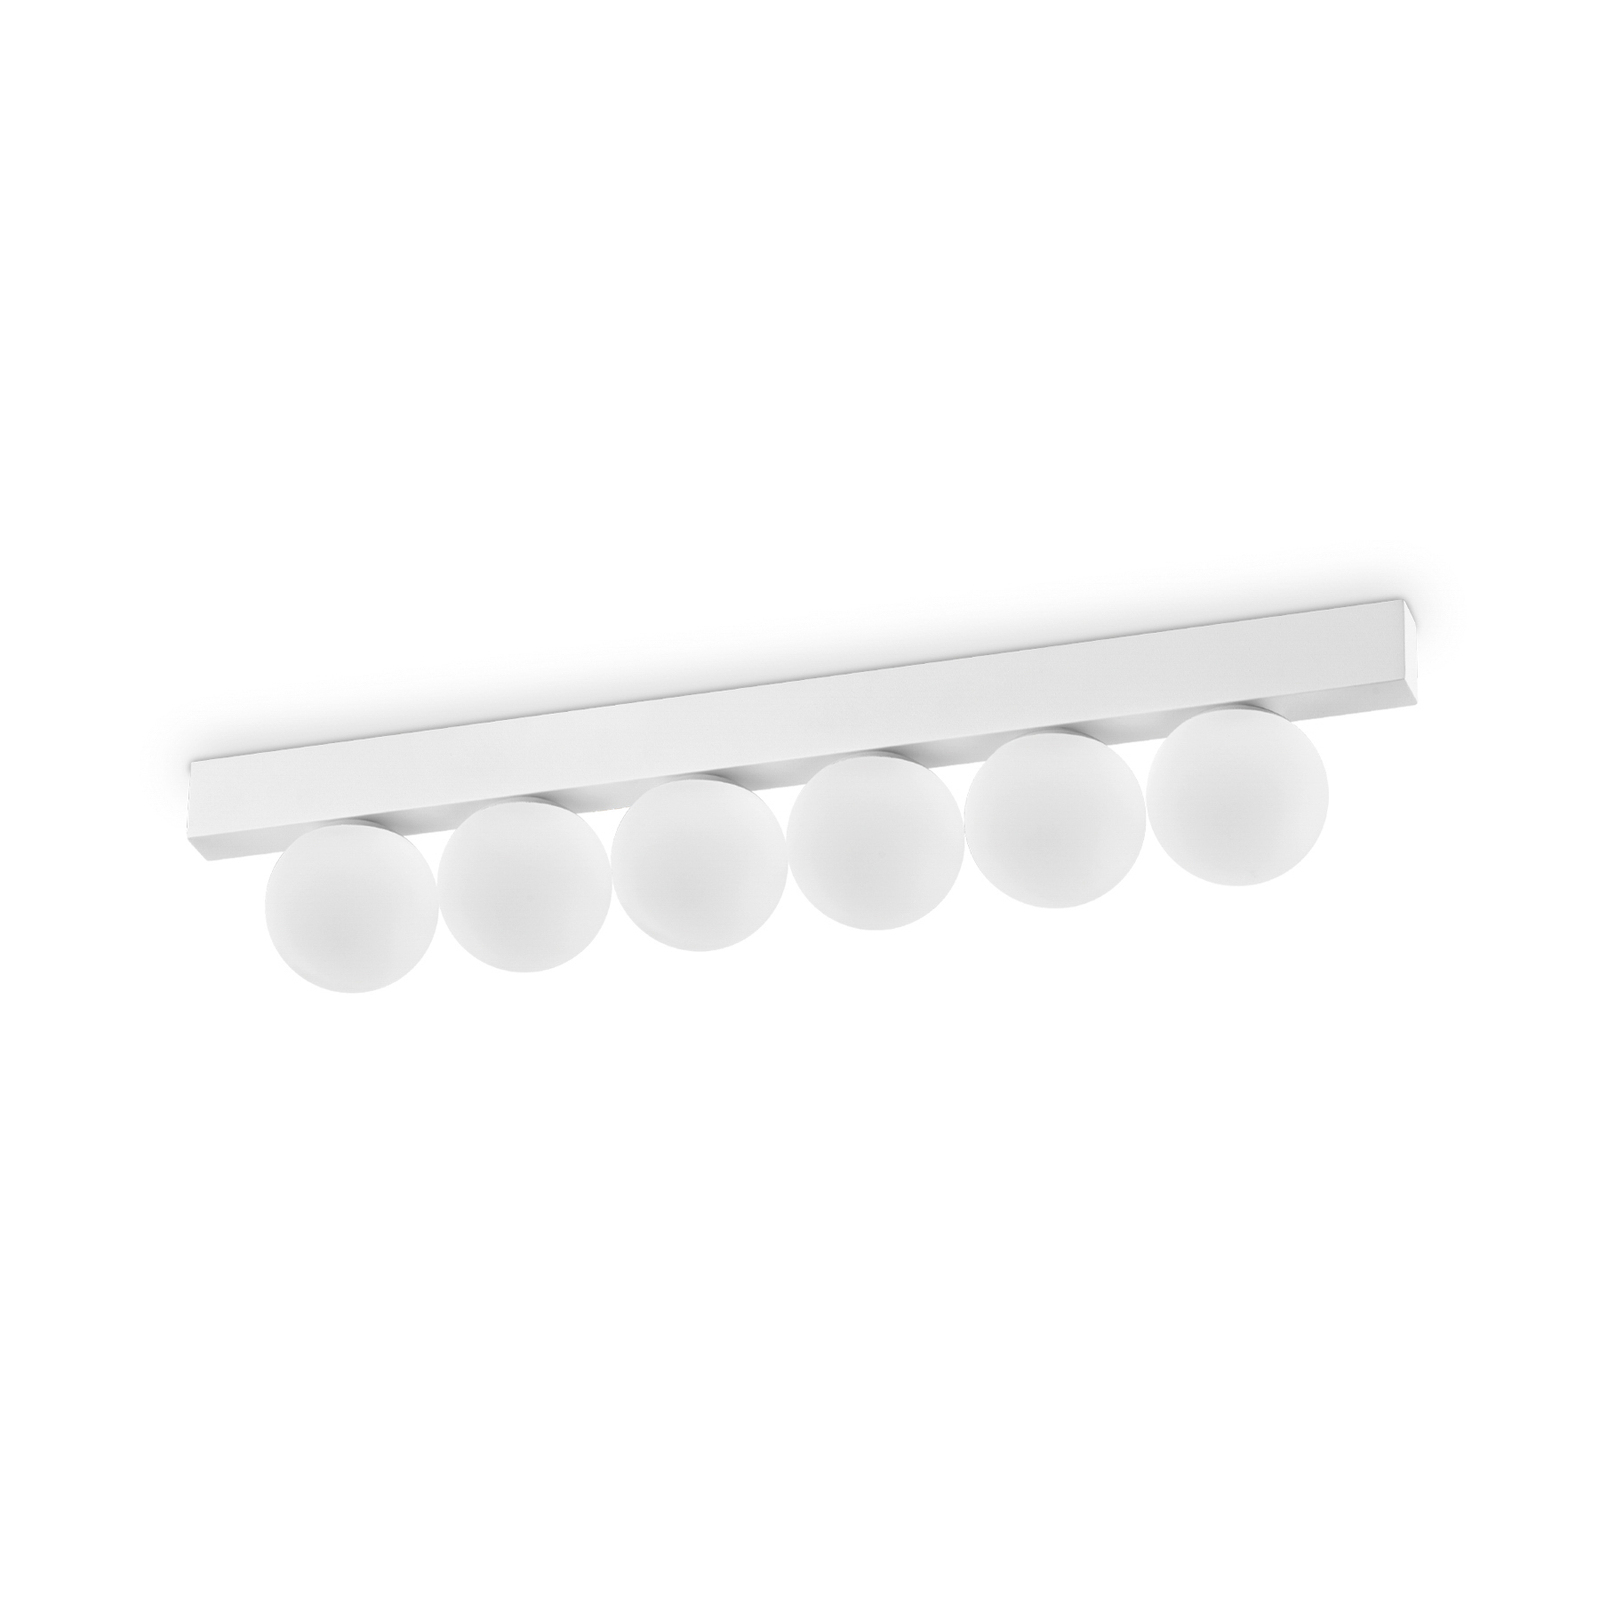 Ideal Lux taklampa Ping Pong vit 6 lampor, opalglas